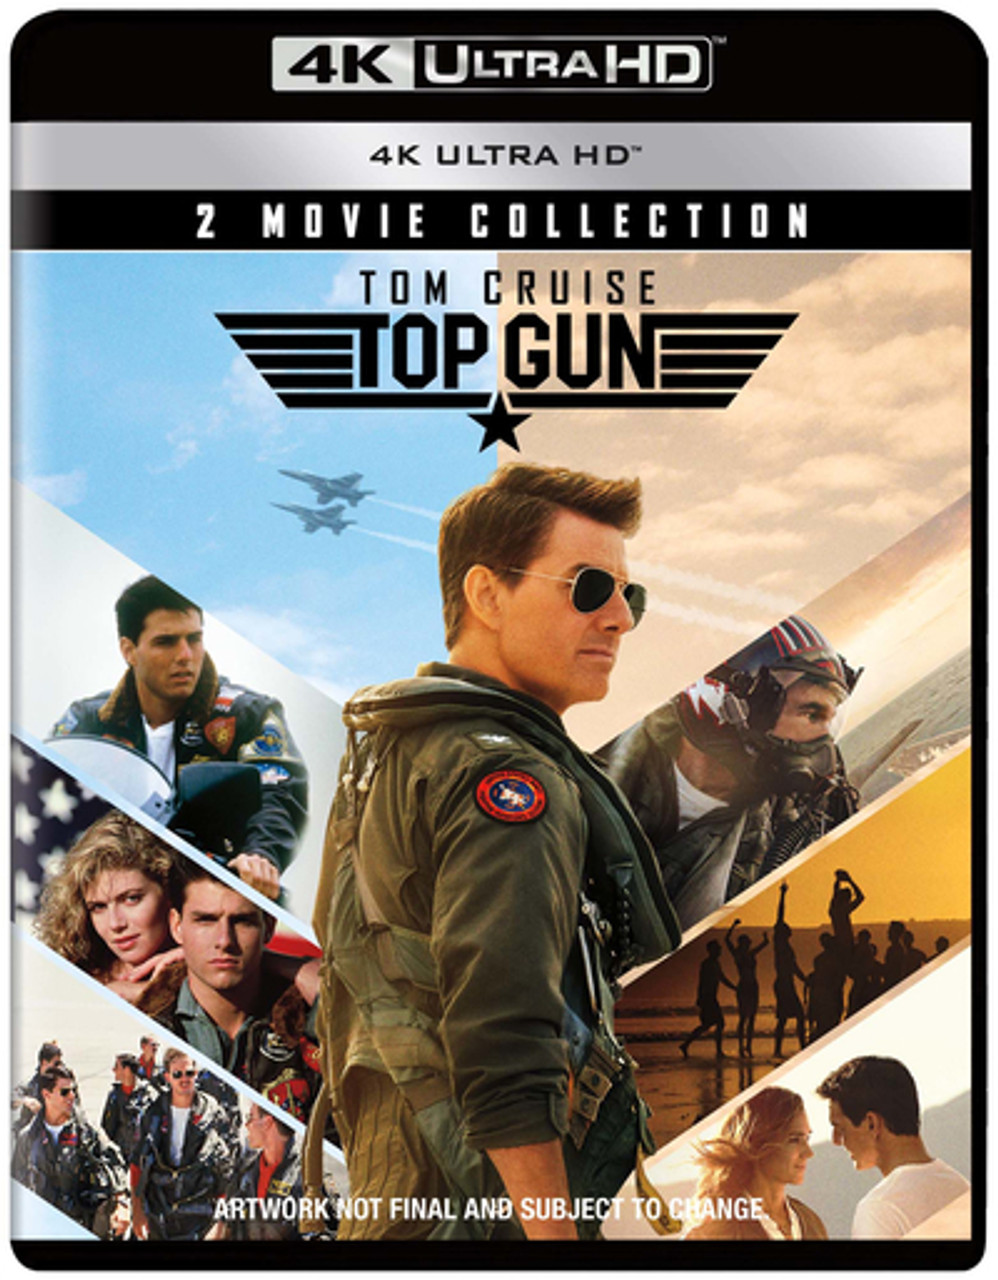 Top Gun/Top Gun Maverick (2022) [Bluray / 4K Ultra HD] of